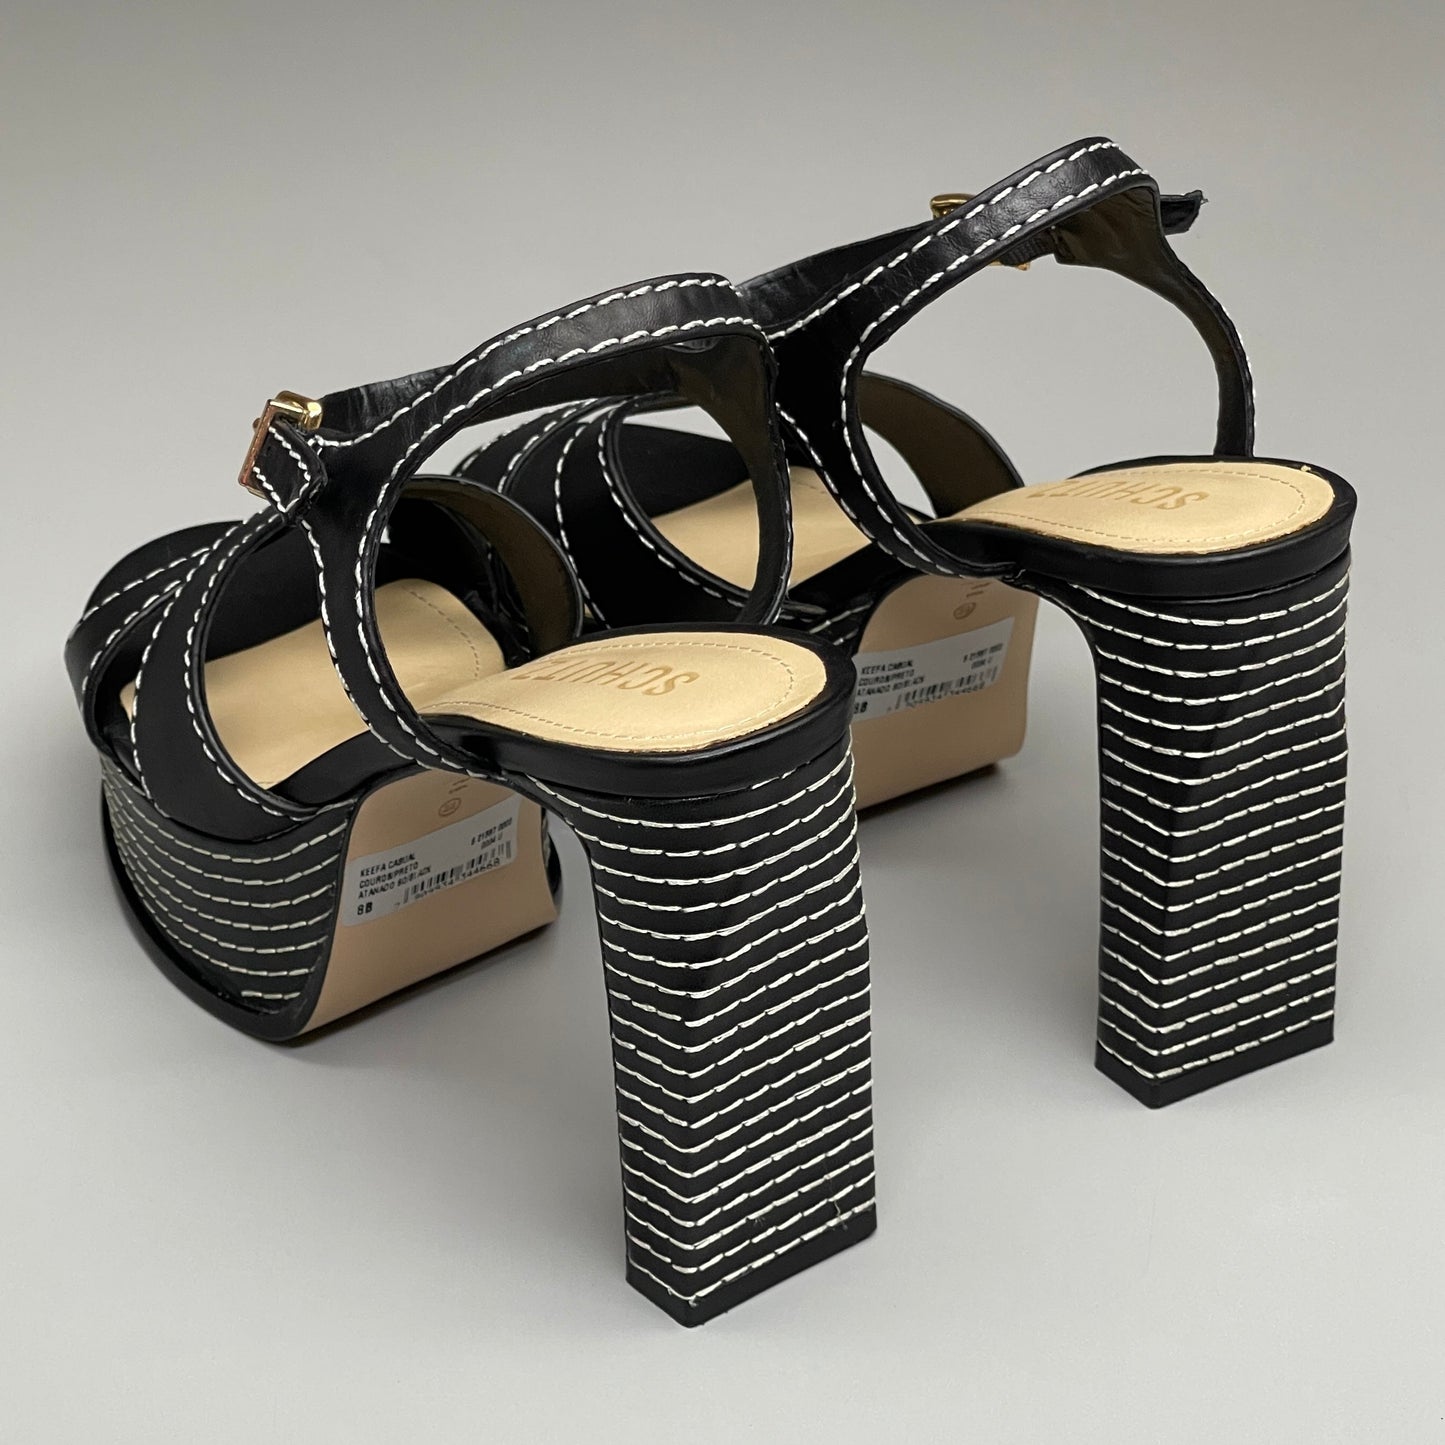 SCHUTZ Keefa Casual Women's Leather Sandal Black Platform 4" Heel Shoes Sz 8.5B (New)